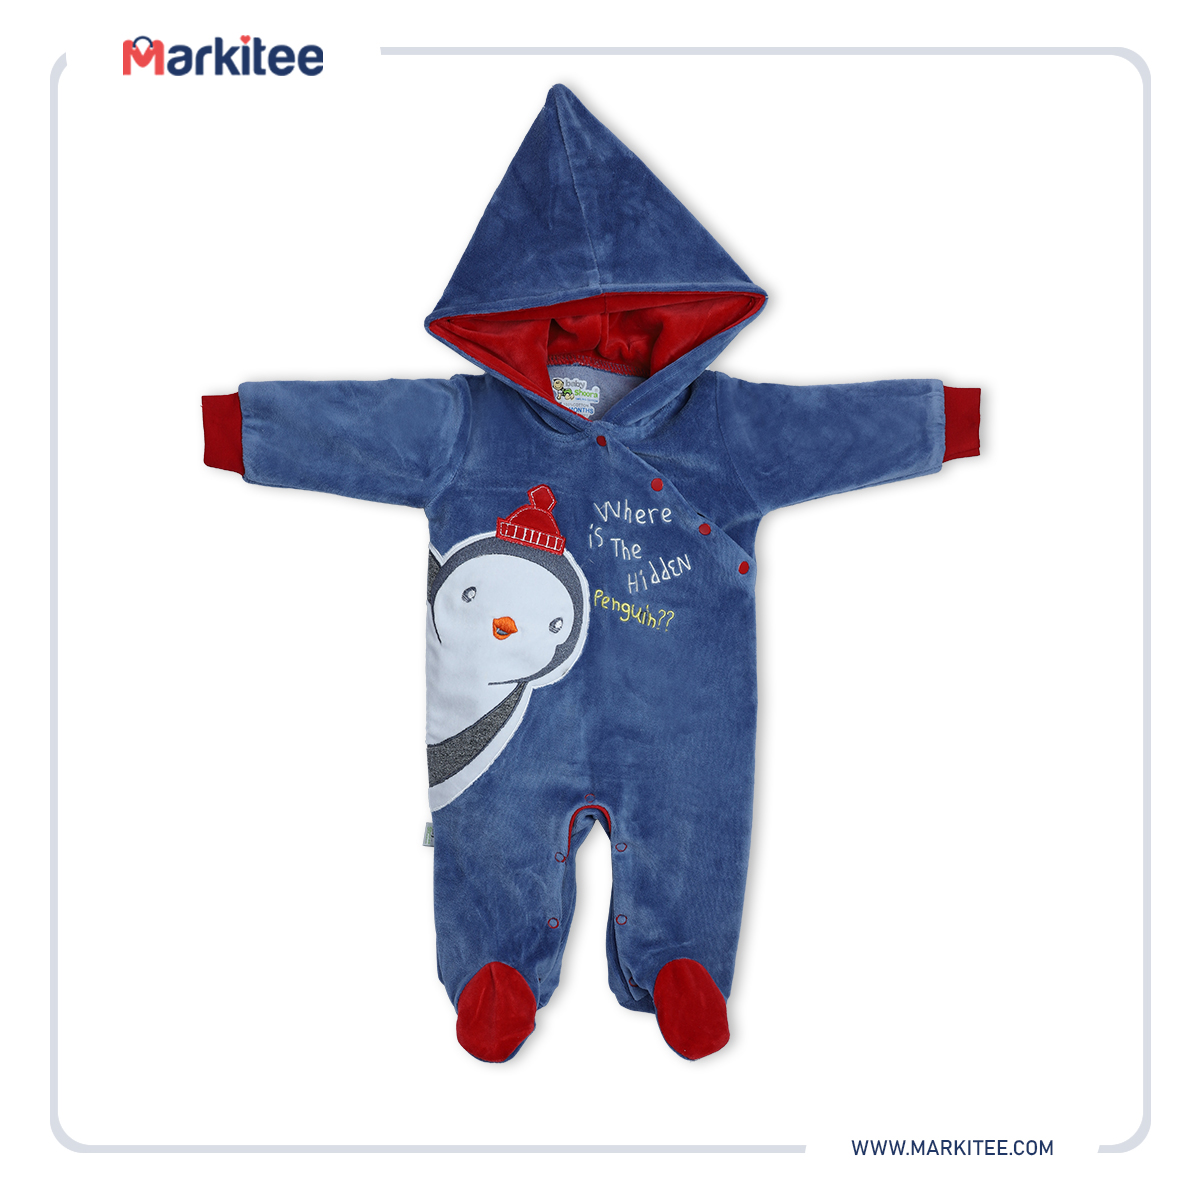 ماركيتي-markitee-20230118041545598_Markitee-babywear- SH6032-NV2 (1).jpg